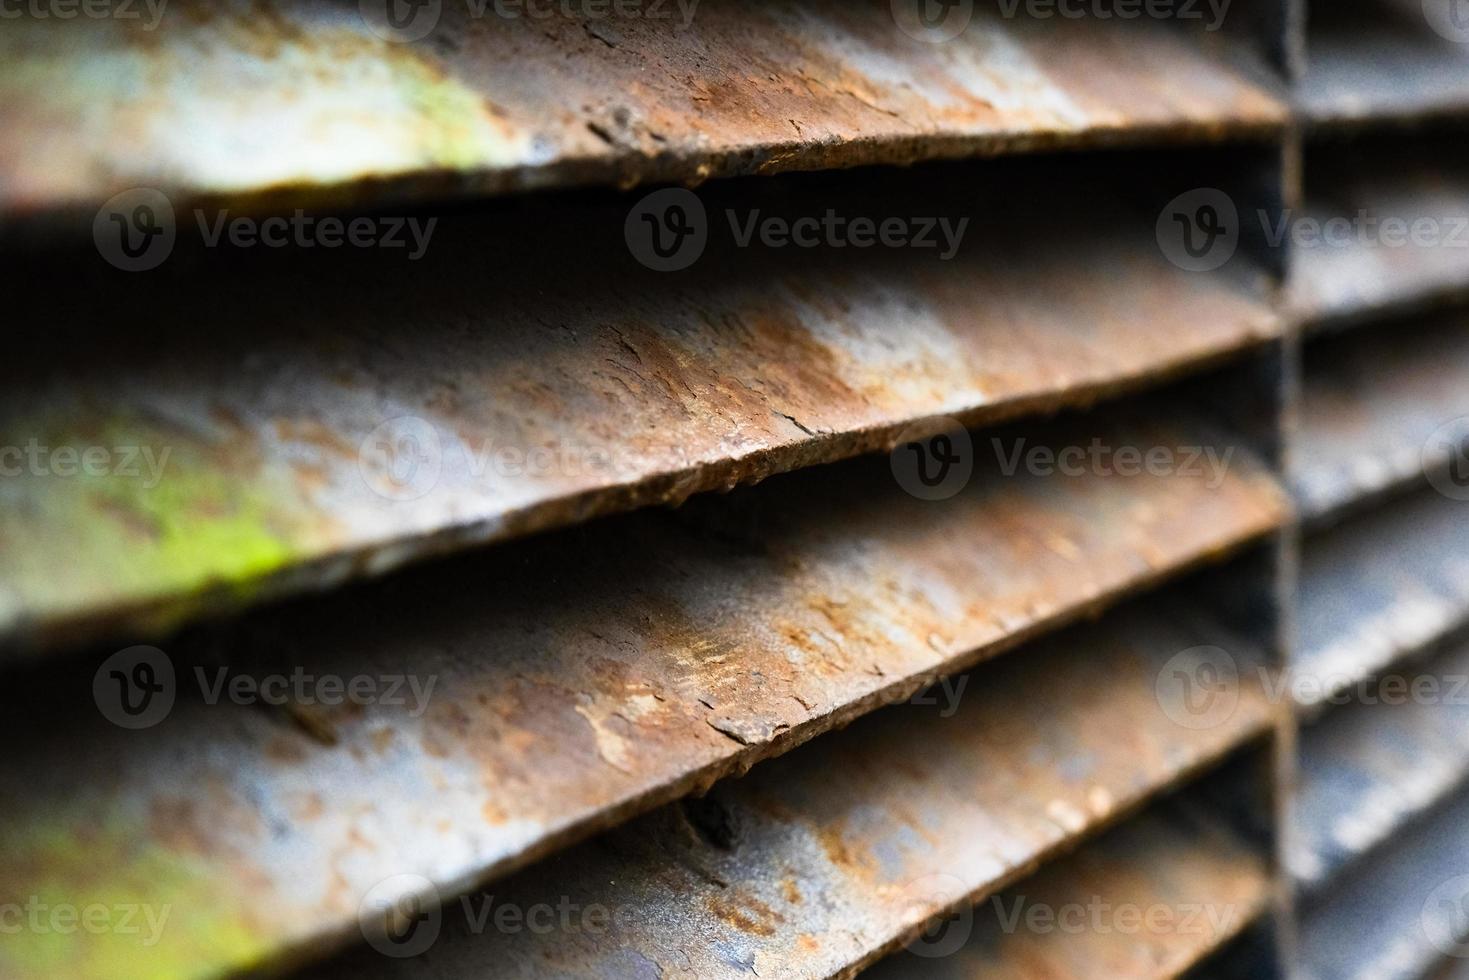 close-up van roestige metalen roostermuur foto